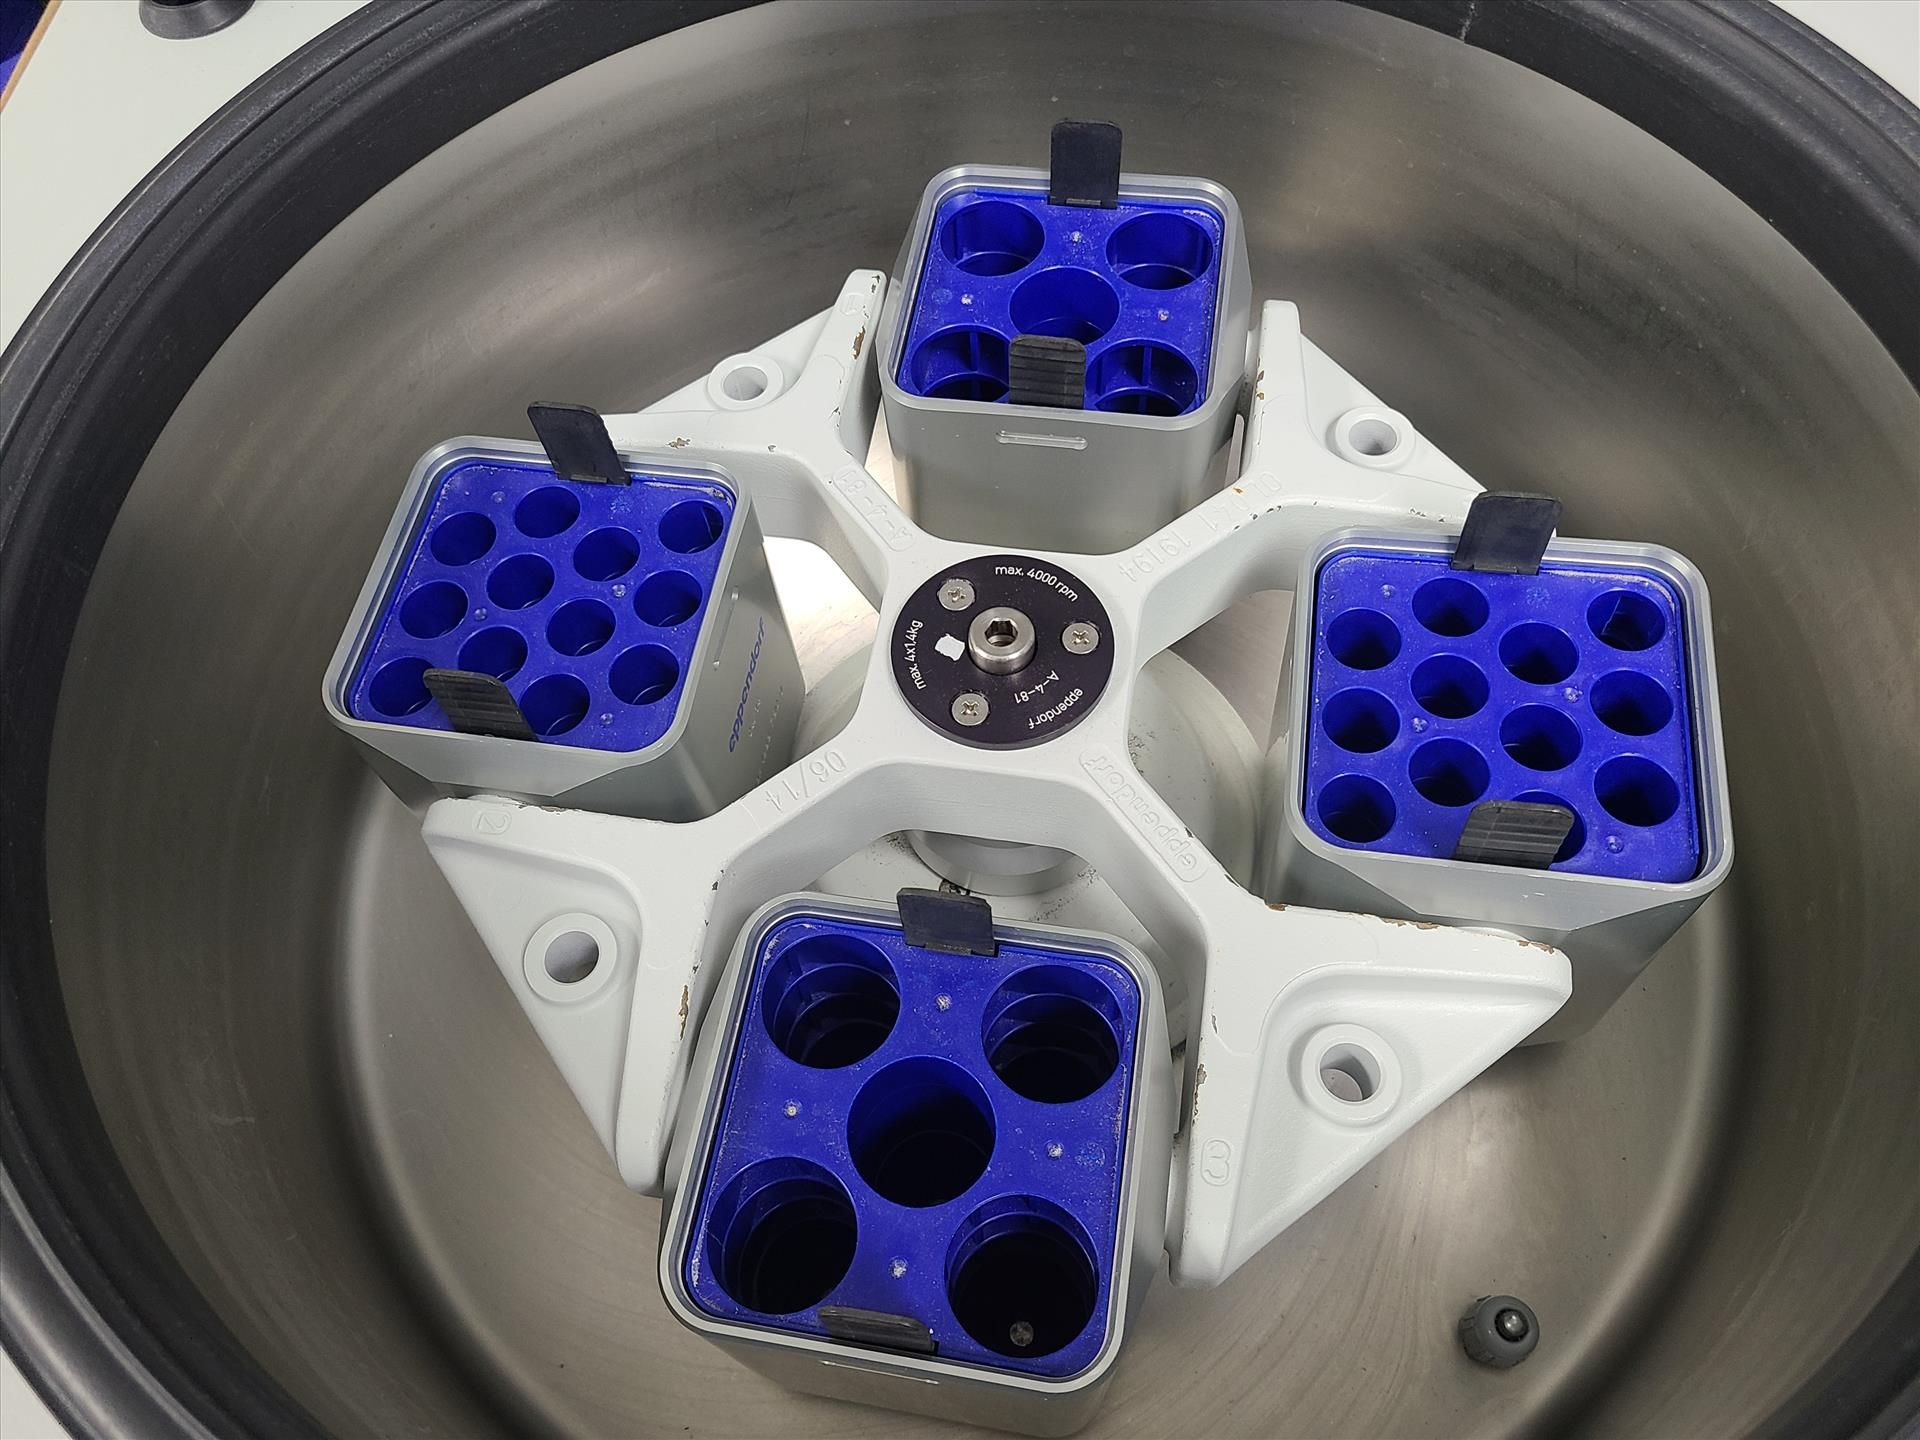 Eppendorf benchtop centrifuge, mod. 5810R, ser. no. 5811DO973808, 15 amp c/w 2 plates, 4 buckets, - Image 2 of 7